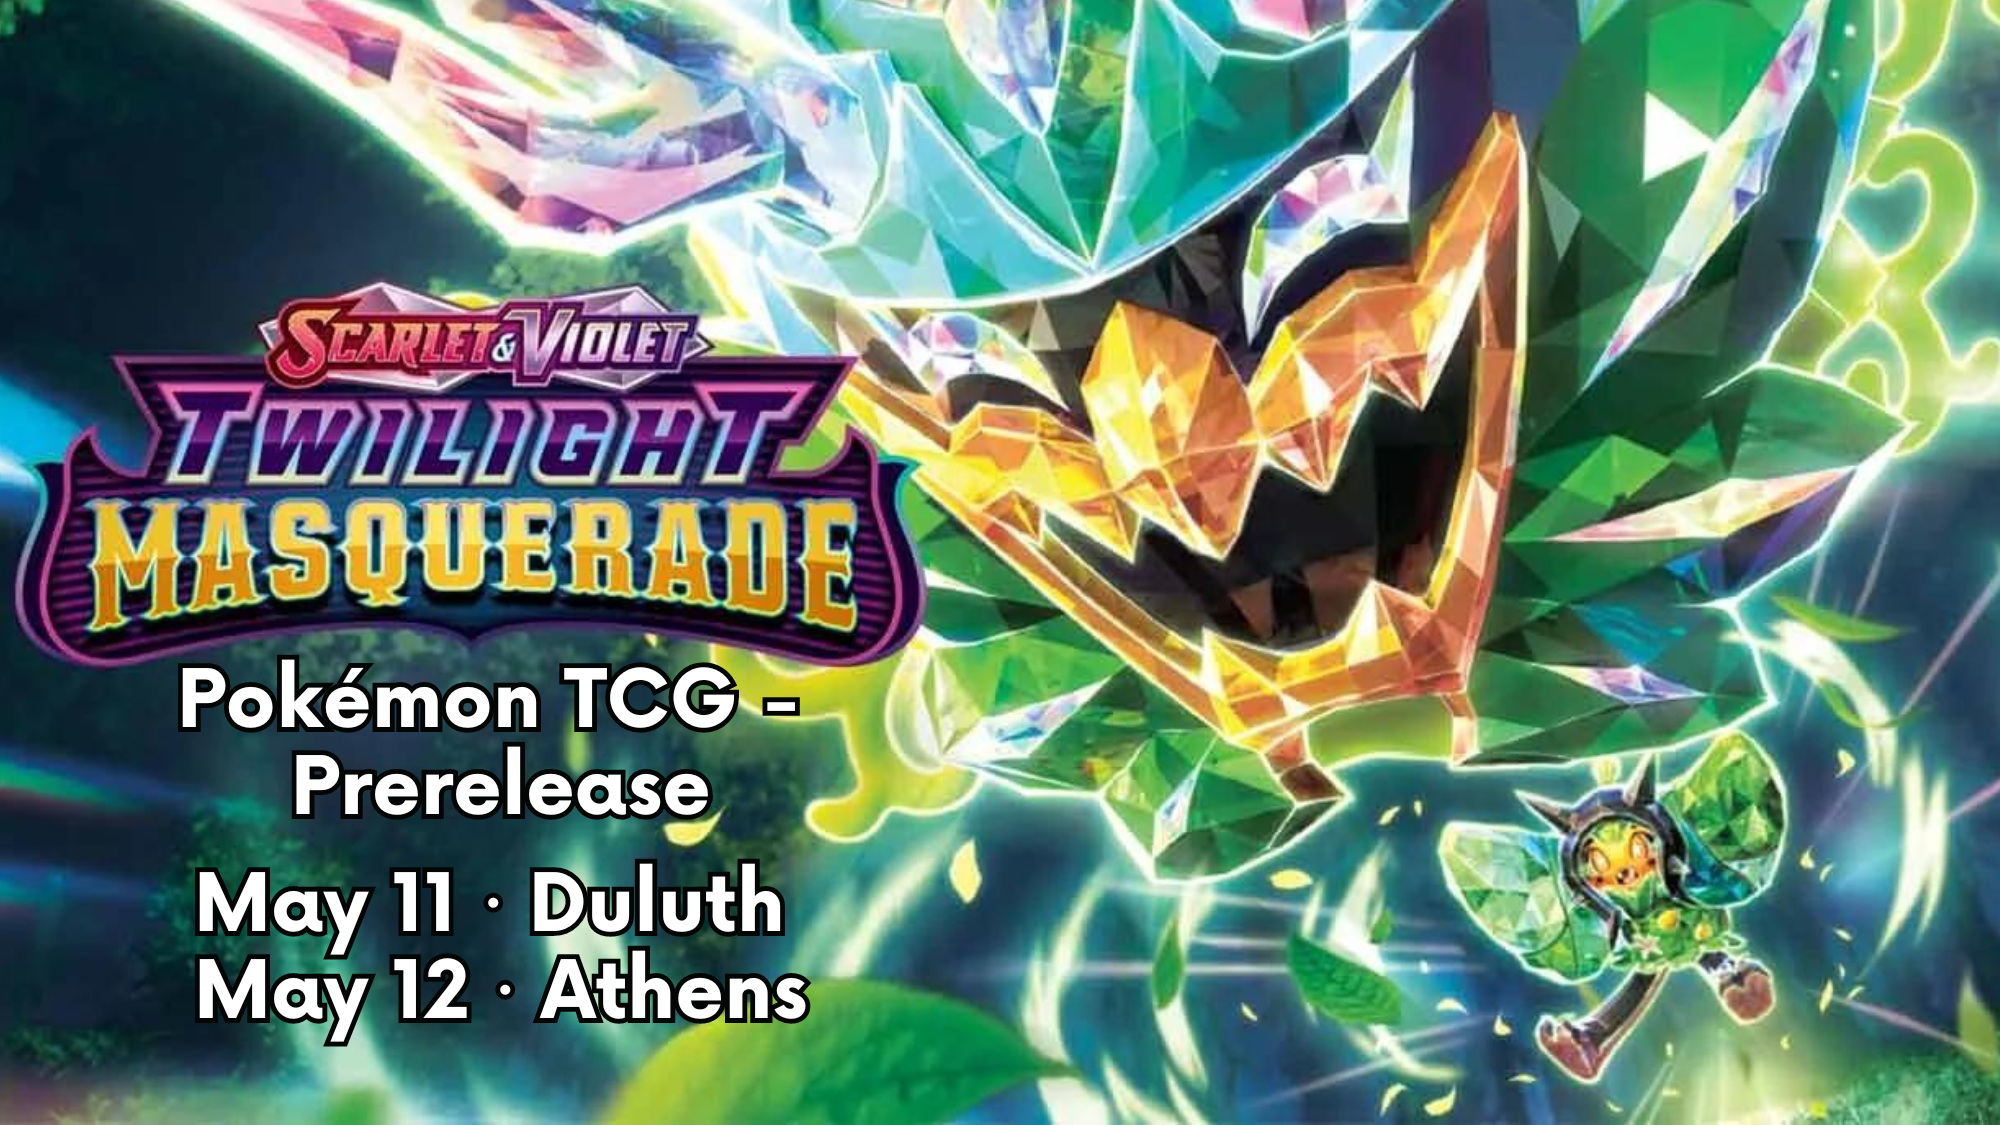 Copy of Pokémon TCG - Twilight Masquerade Prerelease (4)